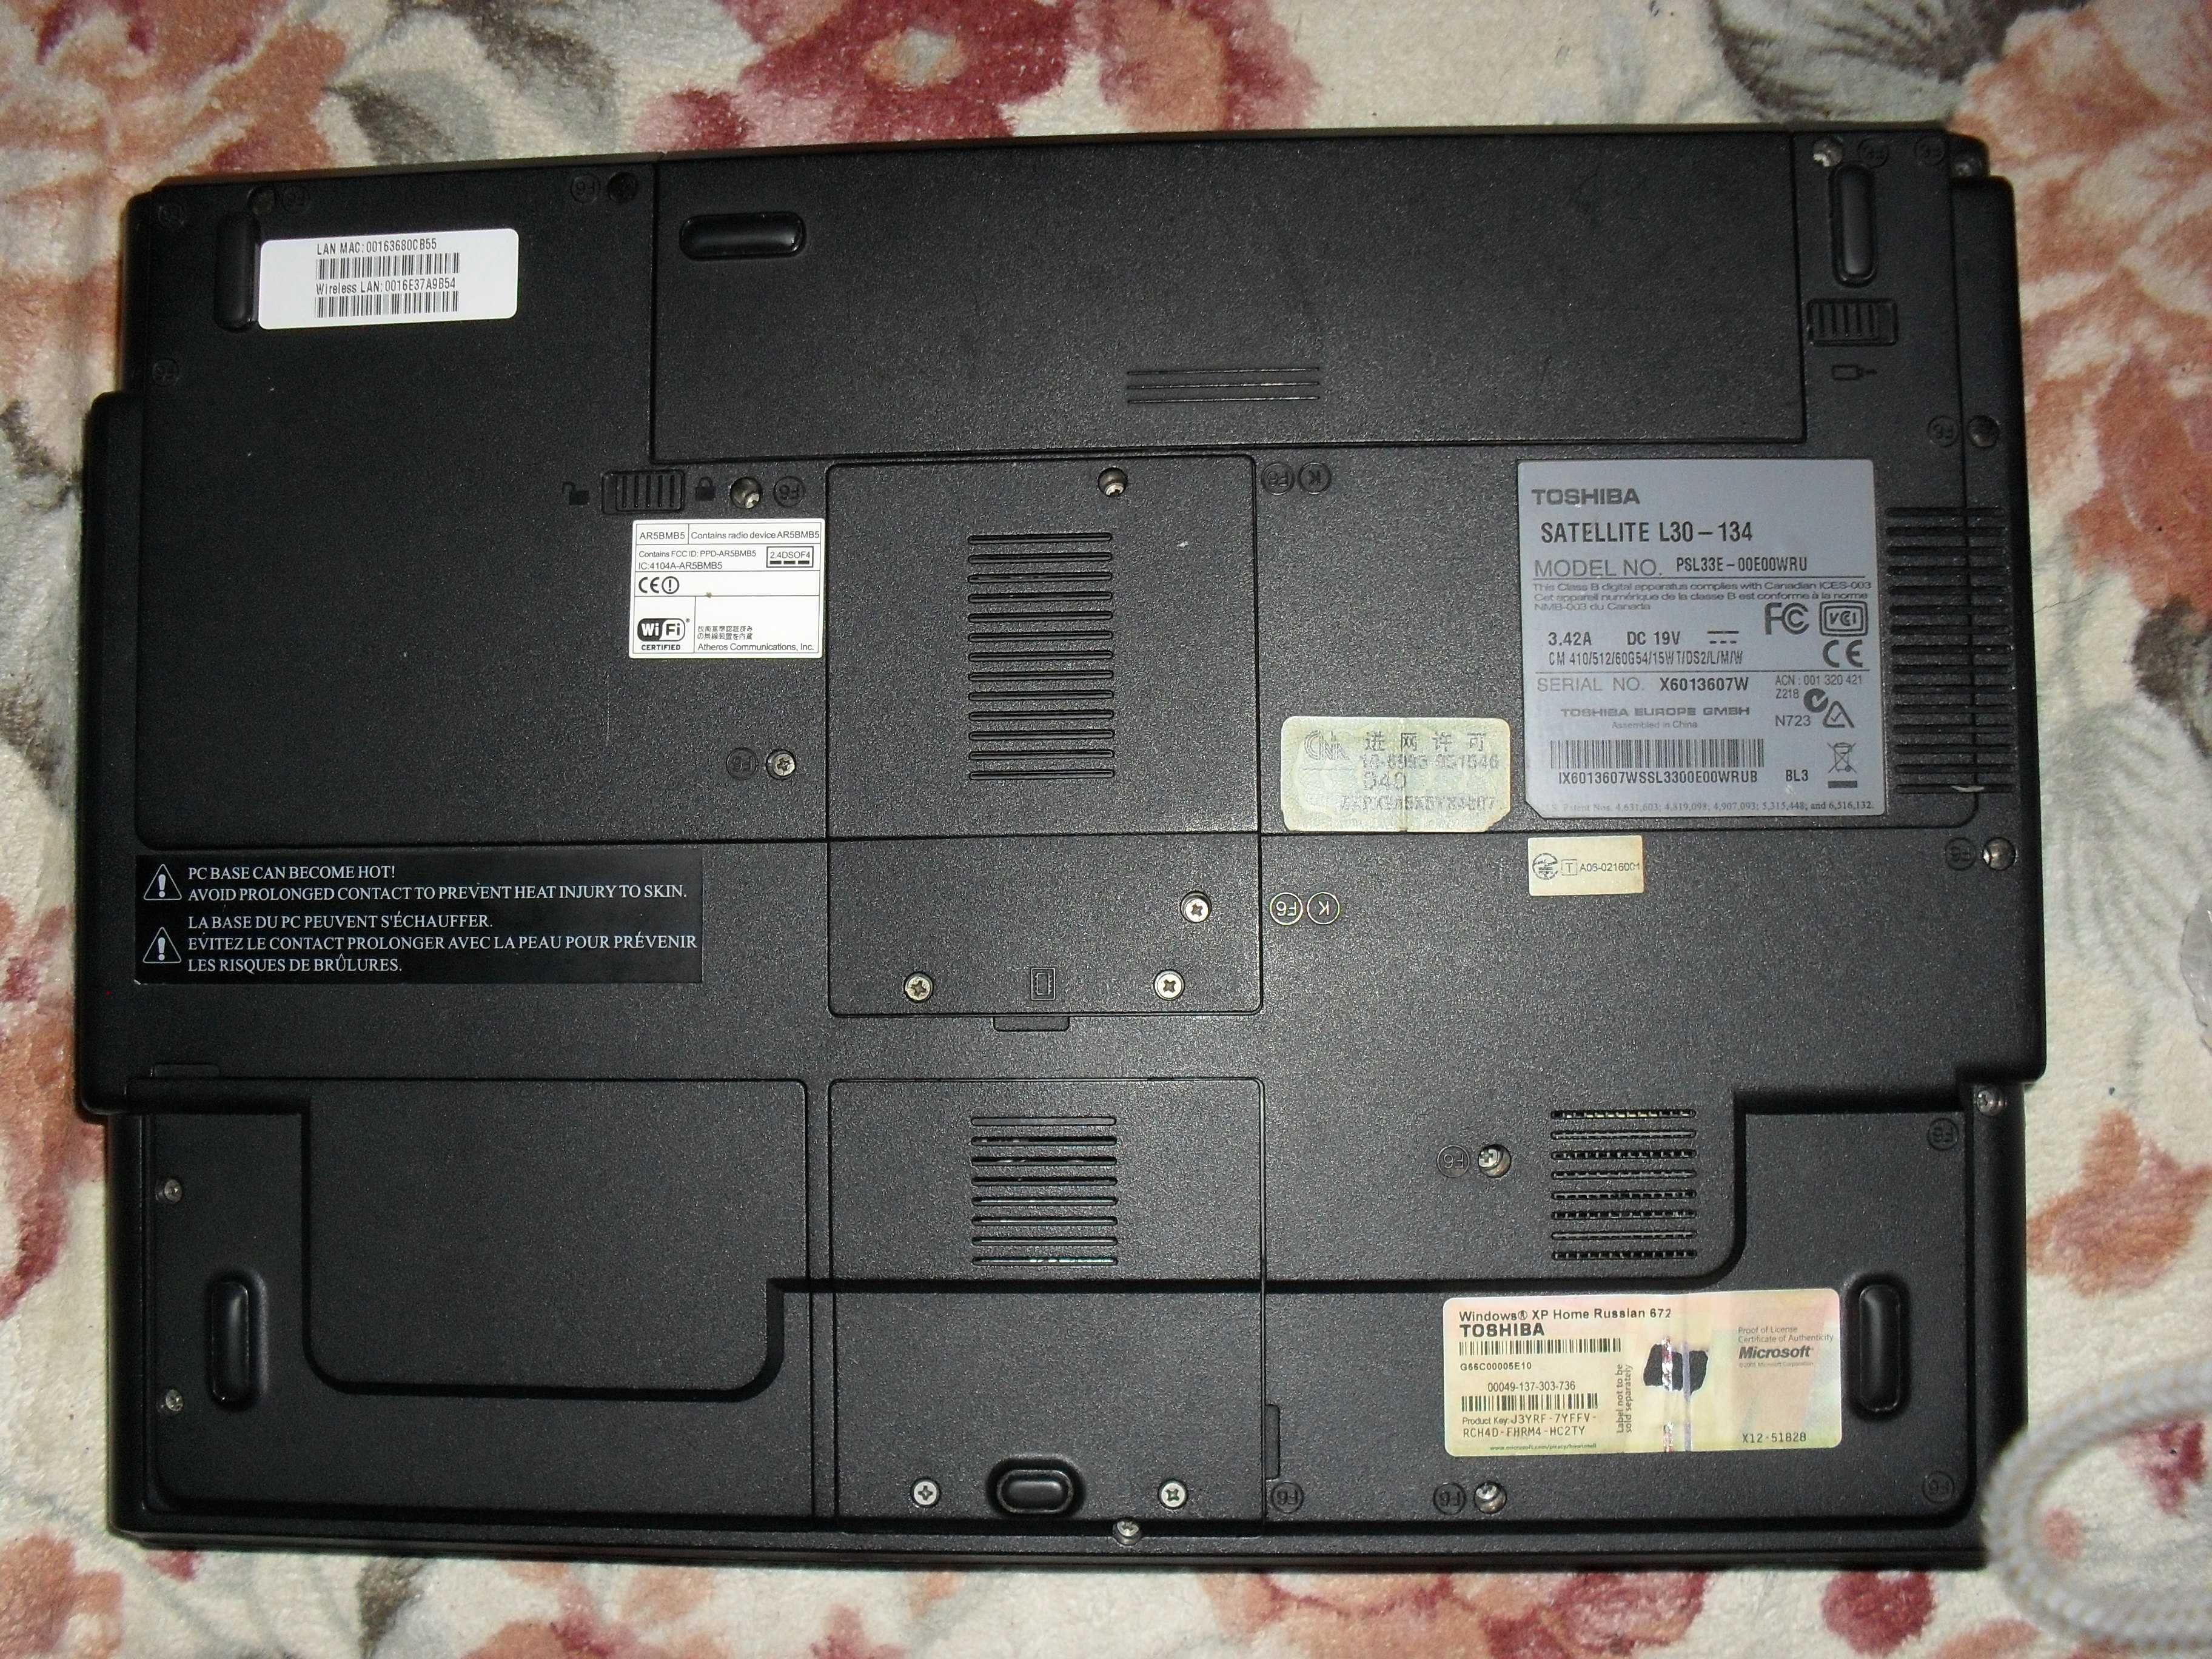 Ноутбук Toshiba Satellite L30-134. Intel T2080 1.7GHz (2 ядра)